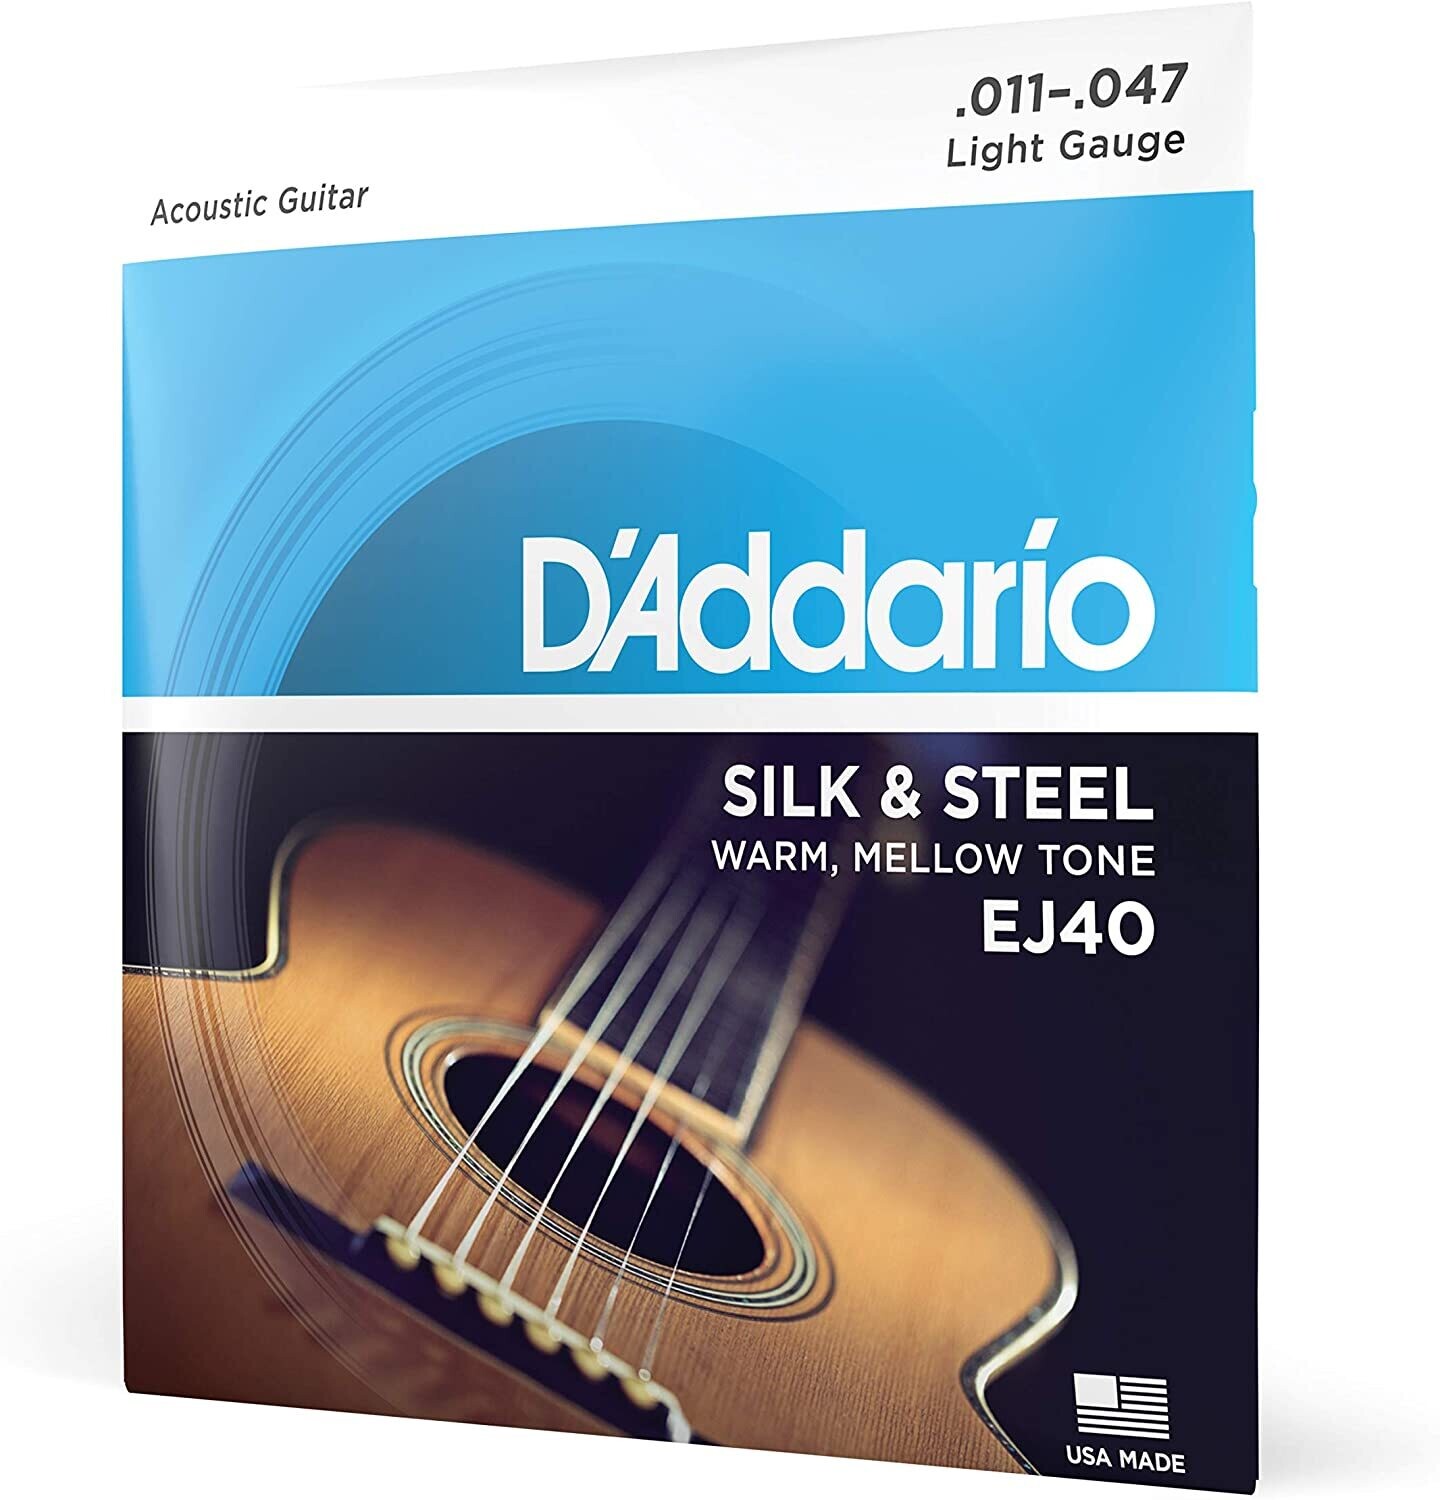 D'Addario Silk & Steel Acoustic Guitar Strings - EJ40-6 String - Warm, Mellow Tone - Light, 11-47